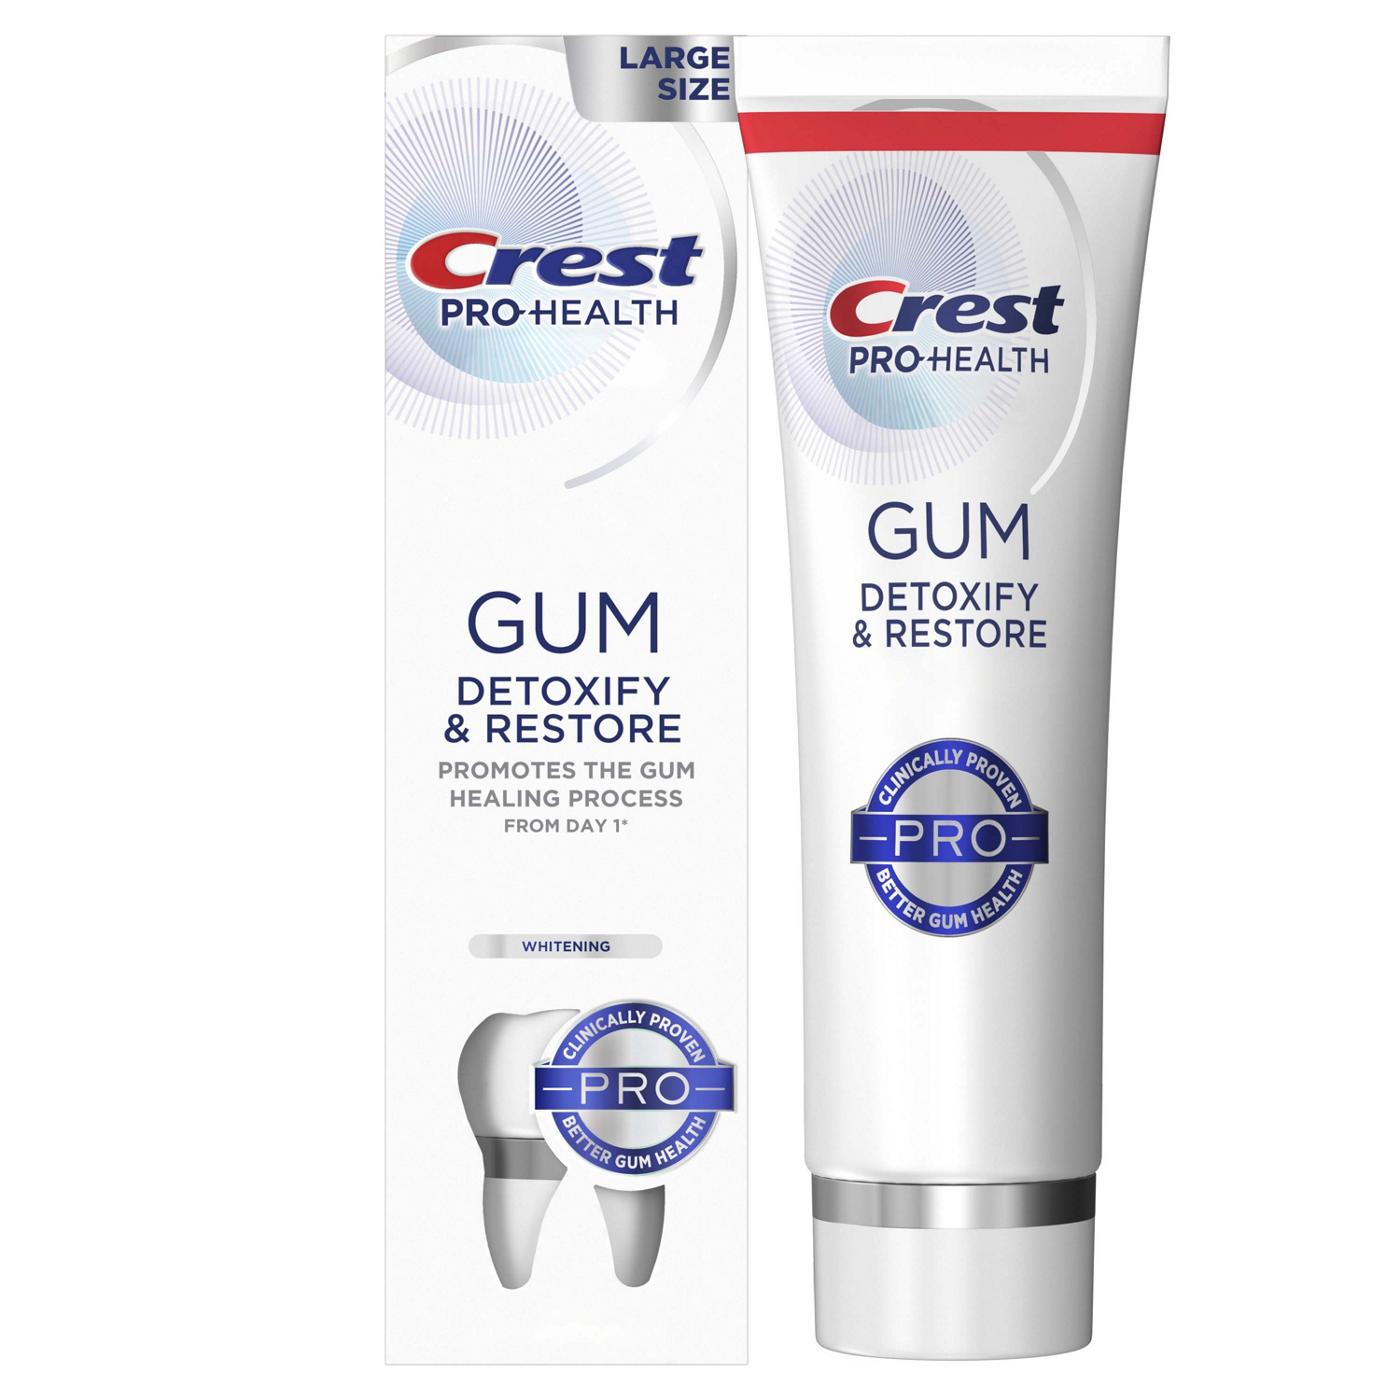 Crest Pro Health Gum Detoxify & Restore - Whitening; image 2 of 8